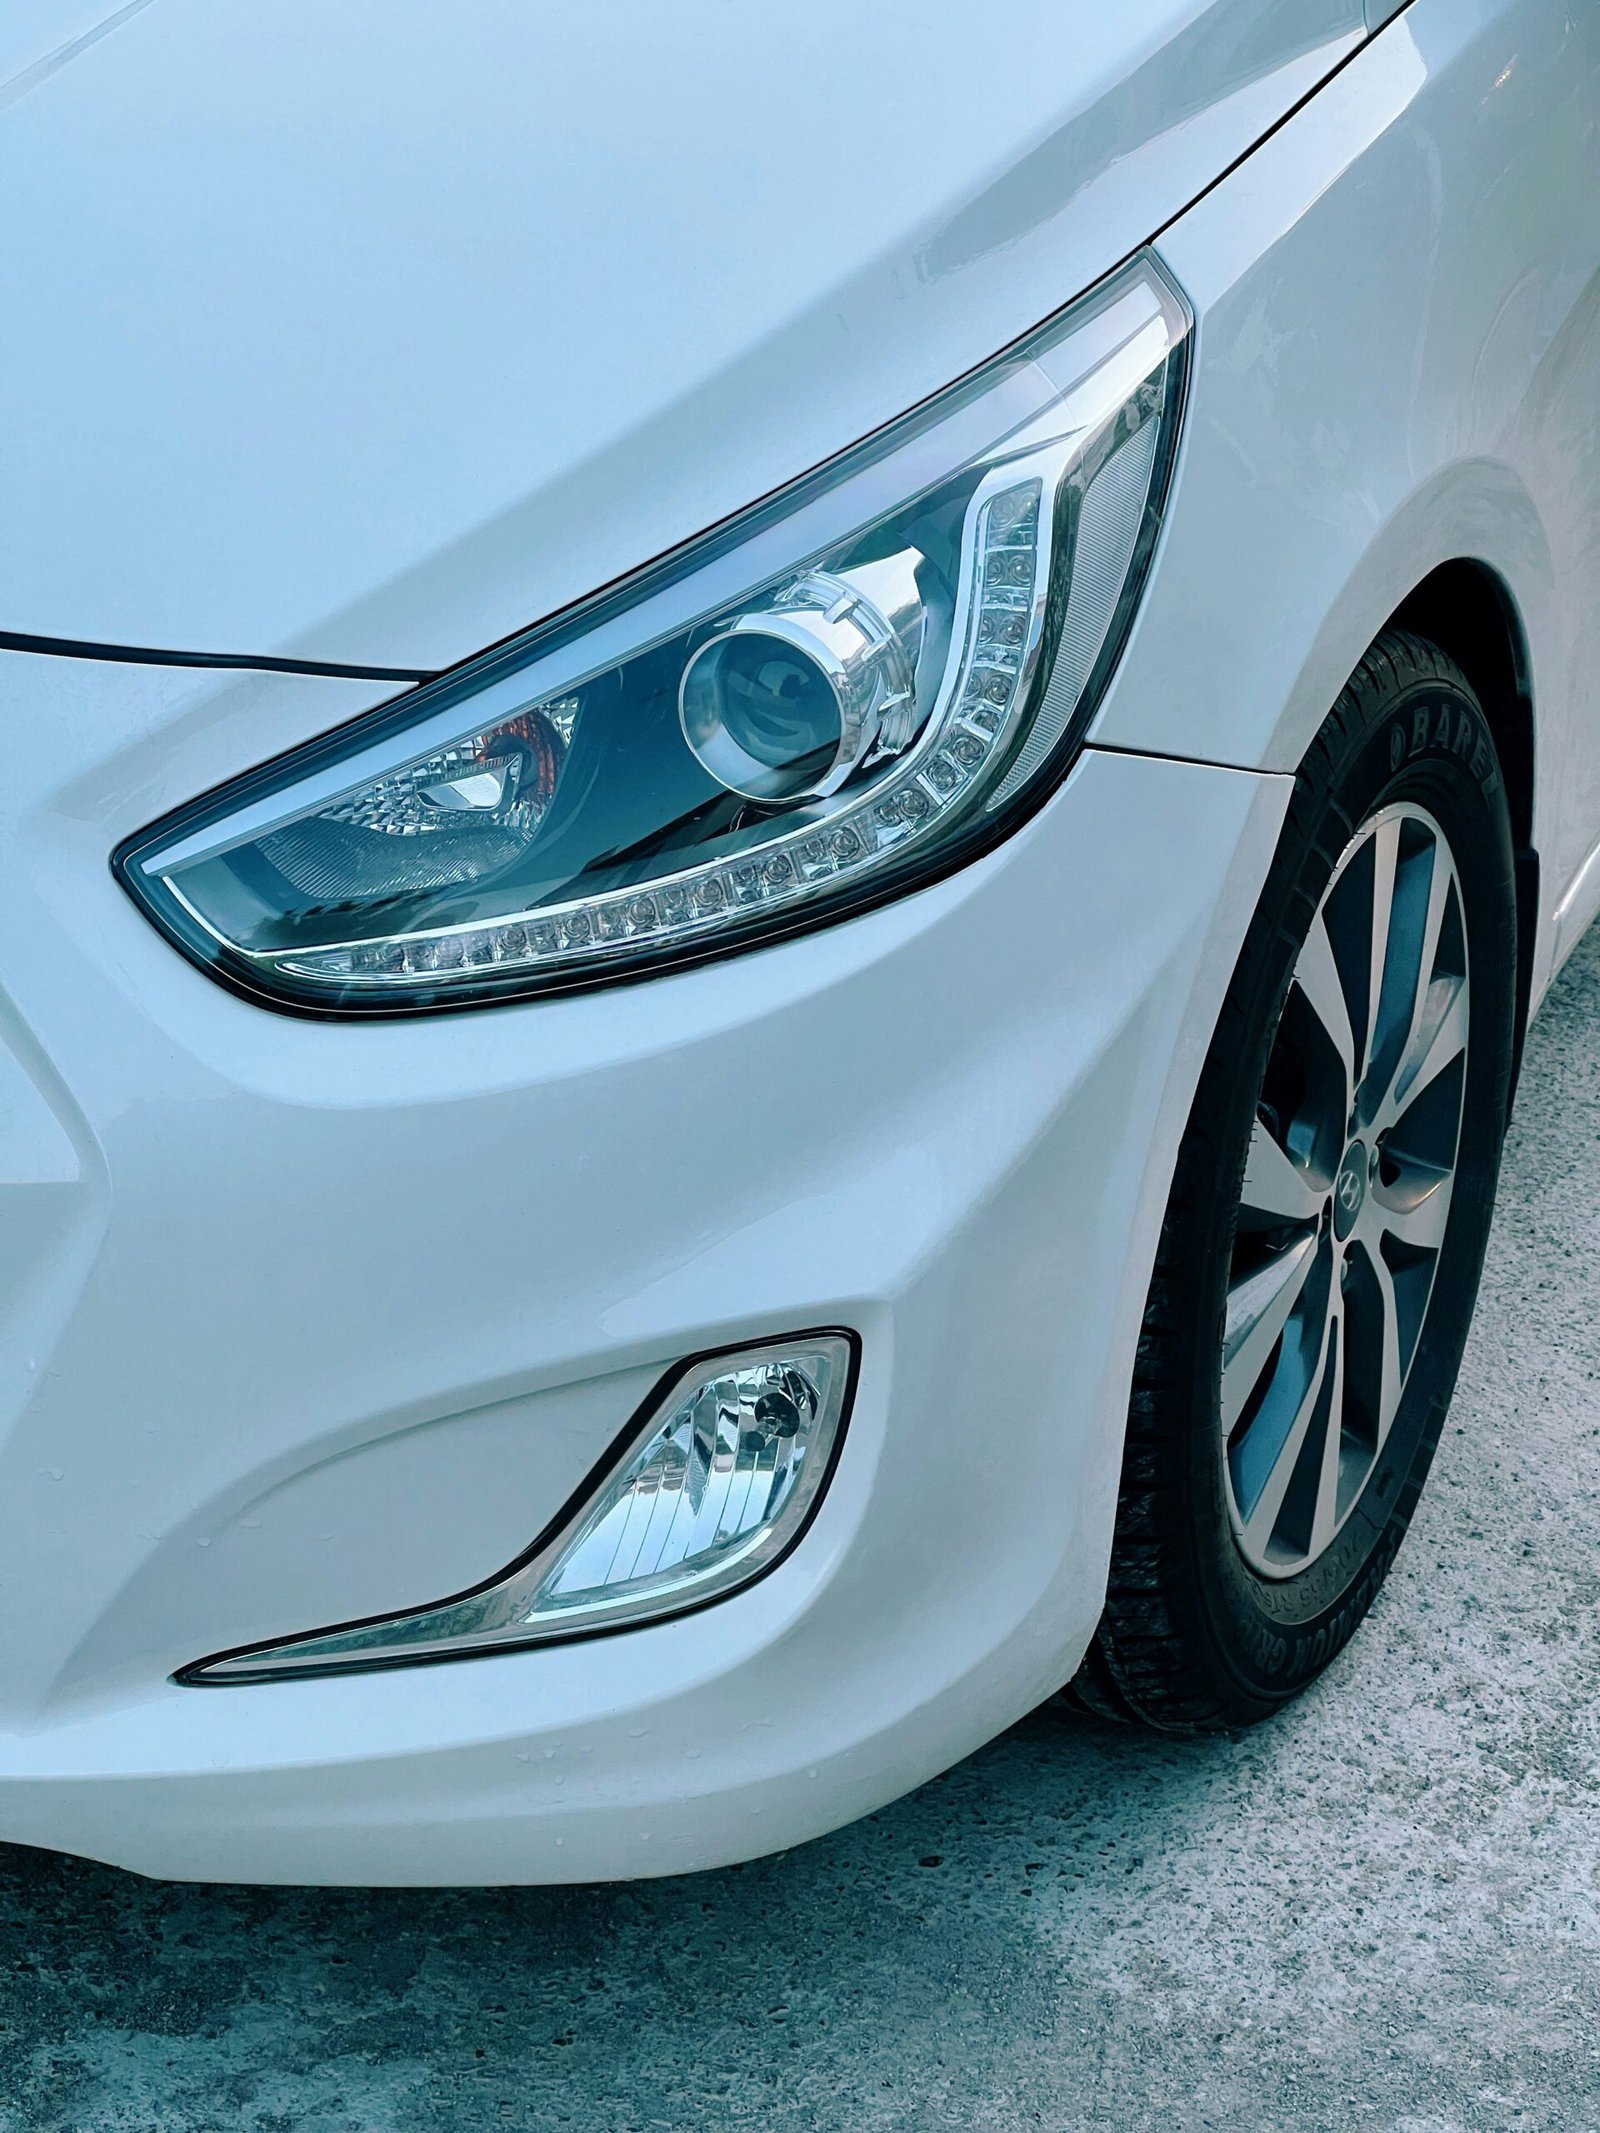 Tips for Maintaining Your New Hyundai Verna: Longevity and Performance